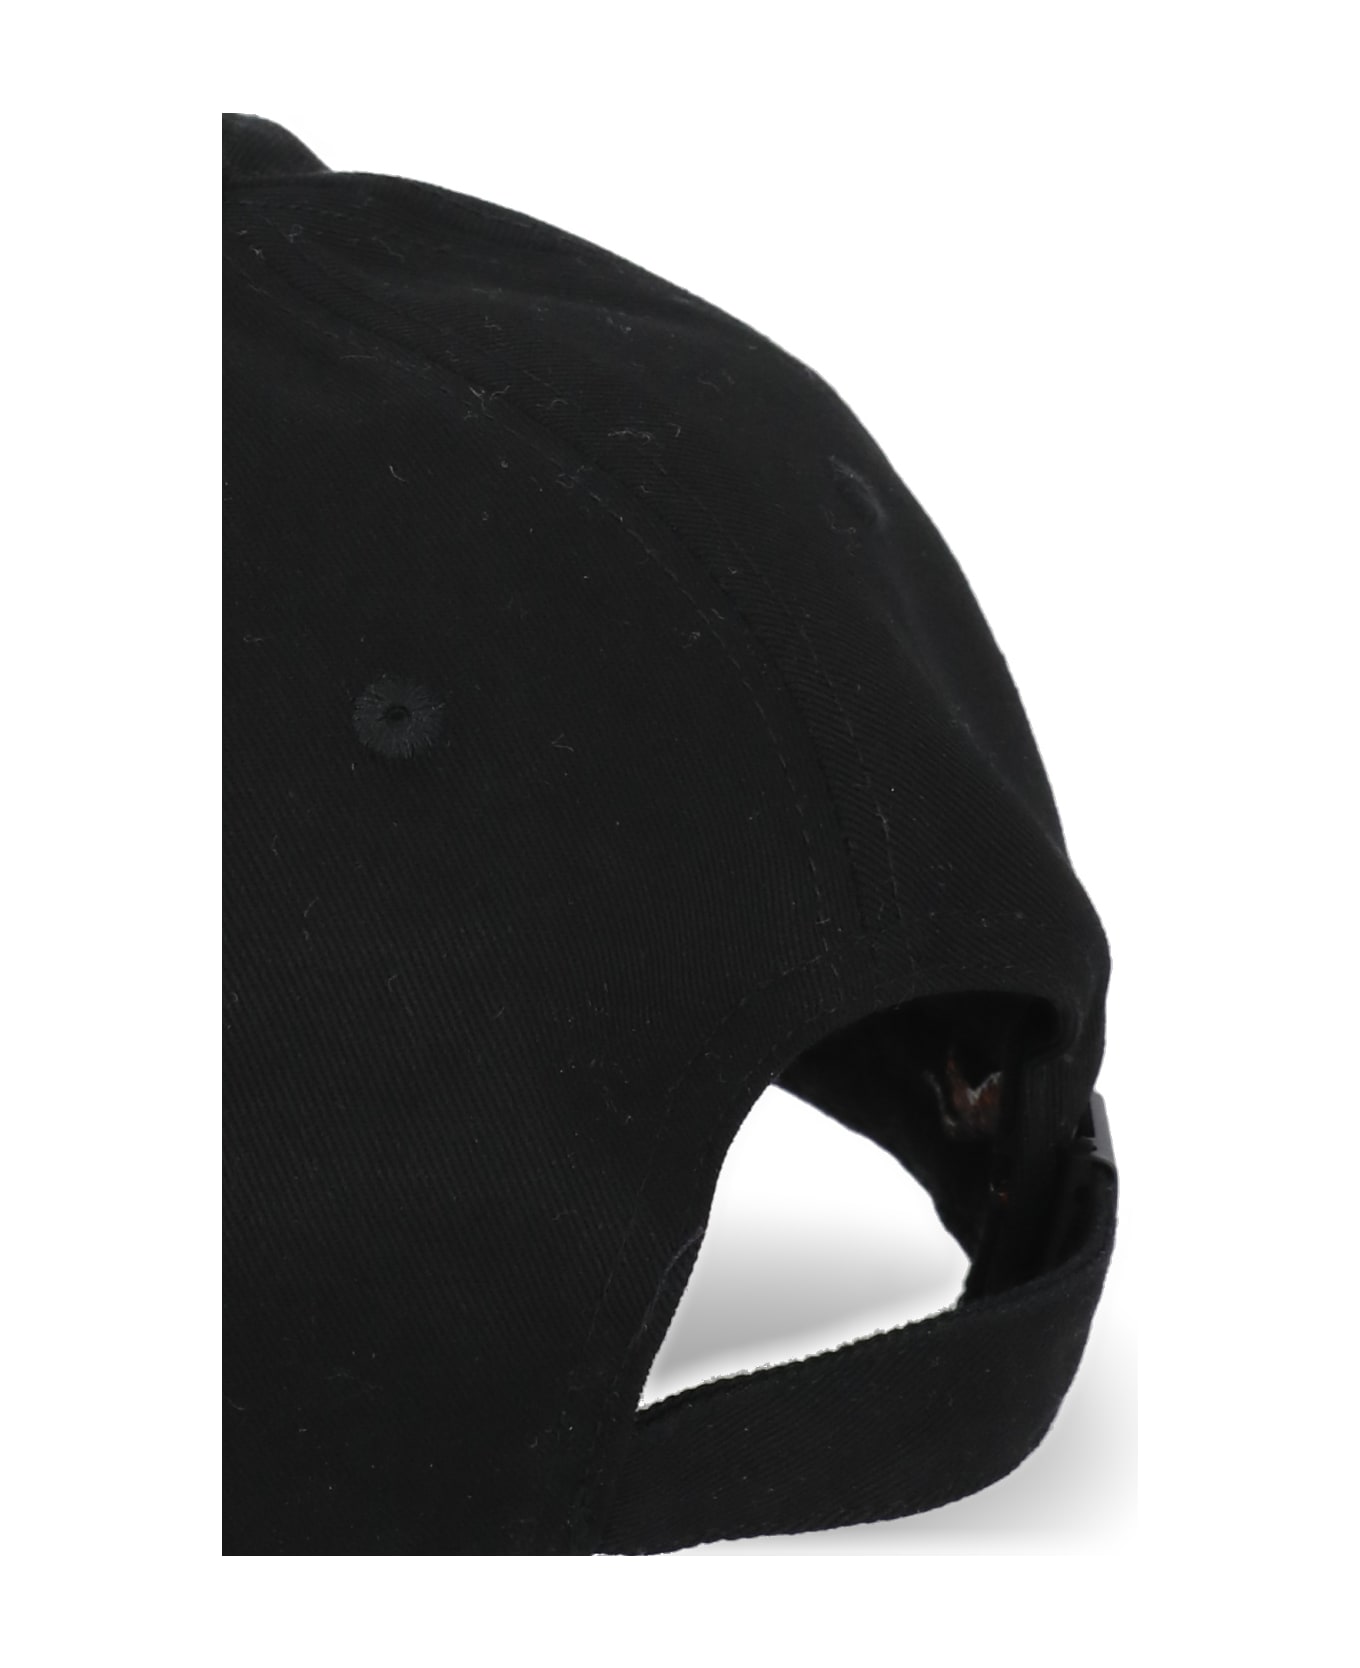 Kenzo Logo Baseball Cap - Black 帽子